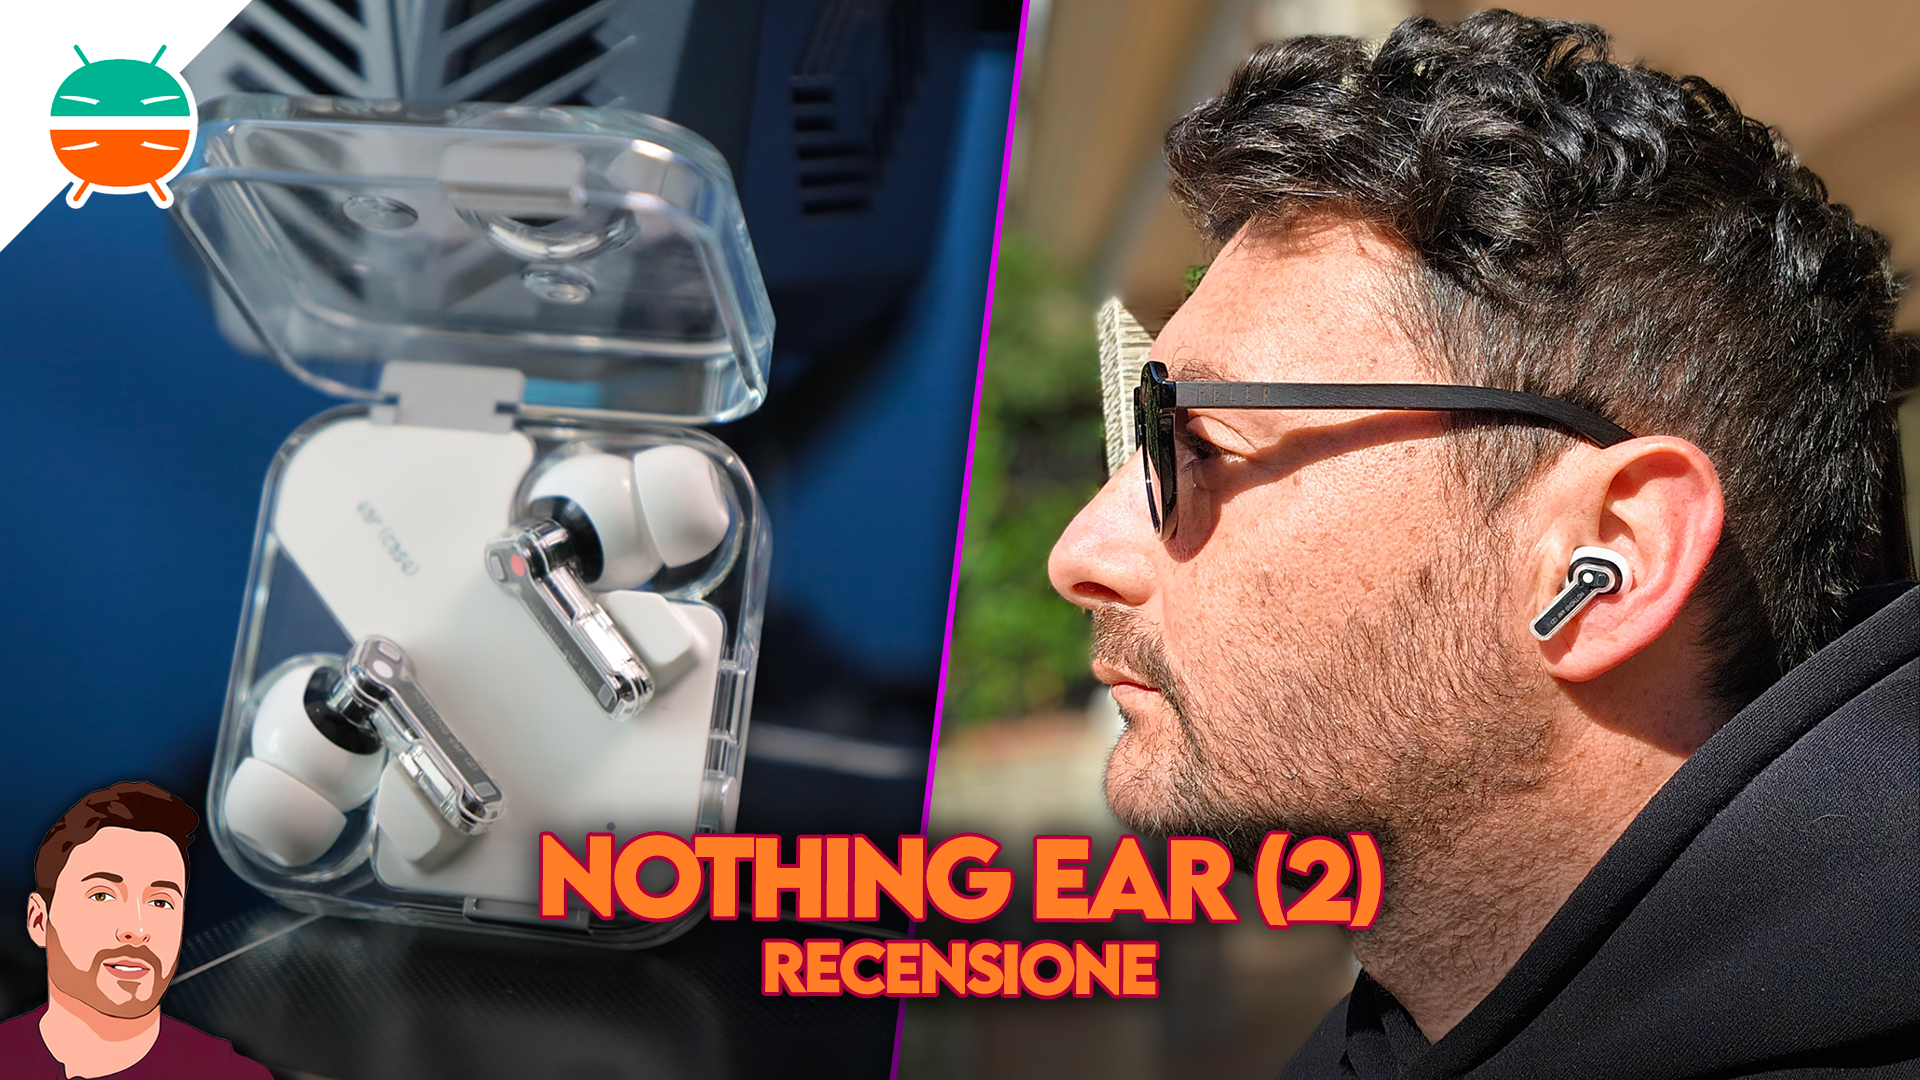 Revisión de auriculares inalámbricos Nothing ear (2): diseño transparente  habitual, pero calidad revolucionada - GizChina.it